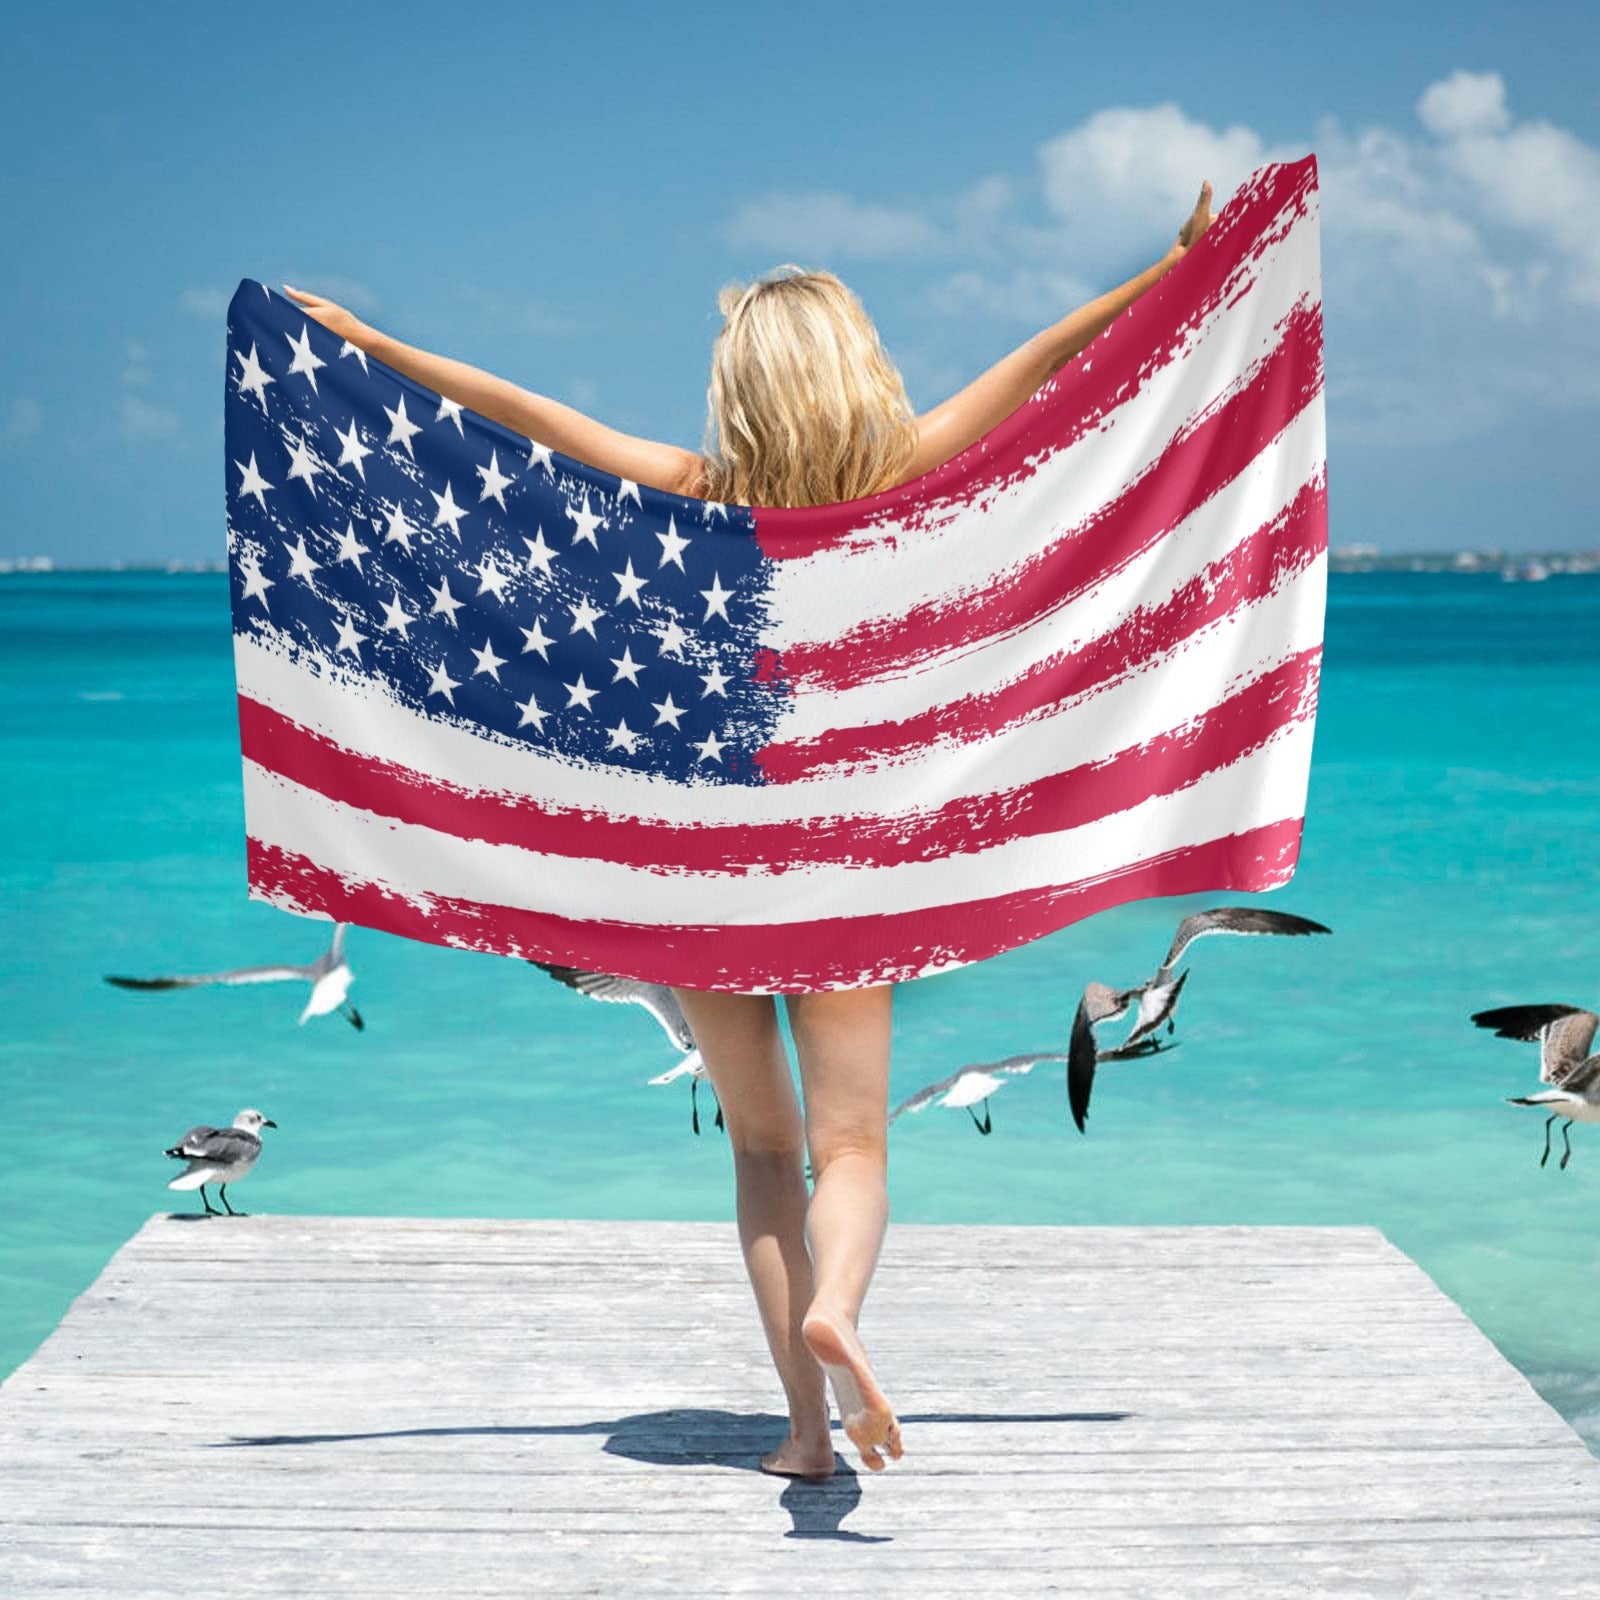 American Flag Oversized Beach Towel, USA Red White Blue Stars Stripes Pool Microfiber Large Swim Quick Dry Designer Men Women XL Cotton Starcove Fashion